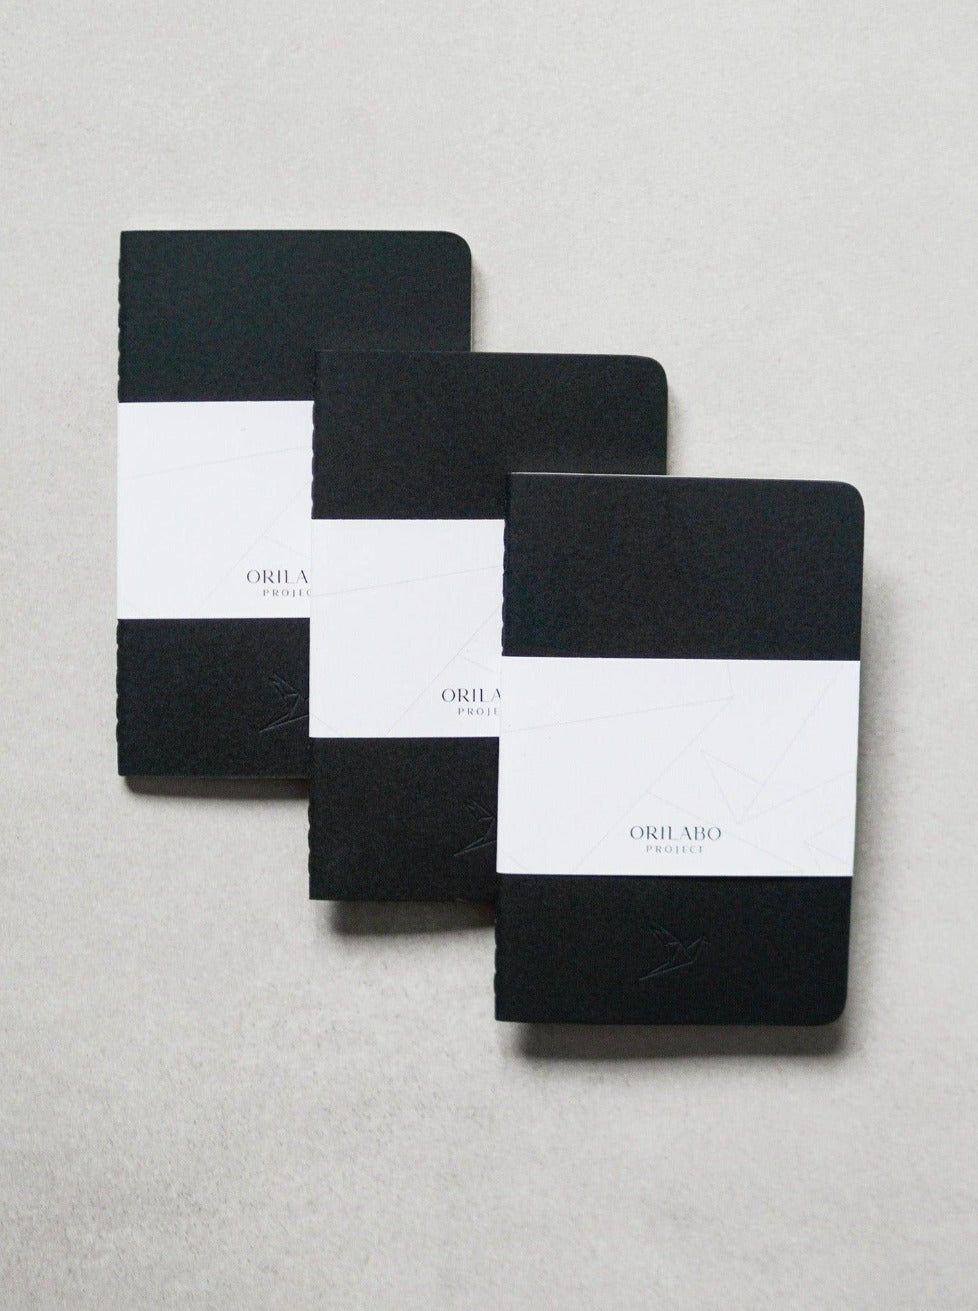 ORILABO x Moleskine Softcover Mini Cahier Note Book 3-Pack - ORILABO Project